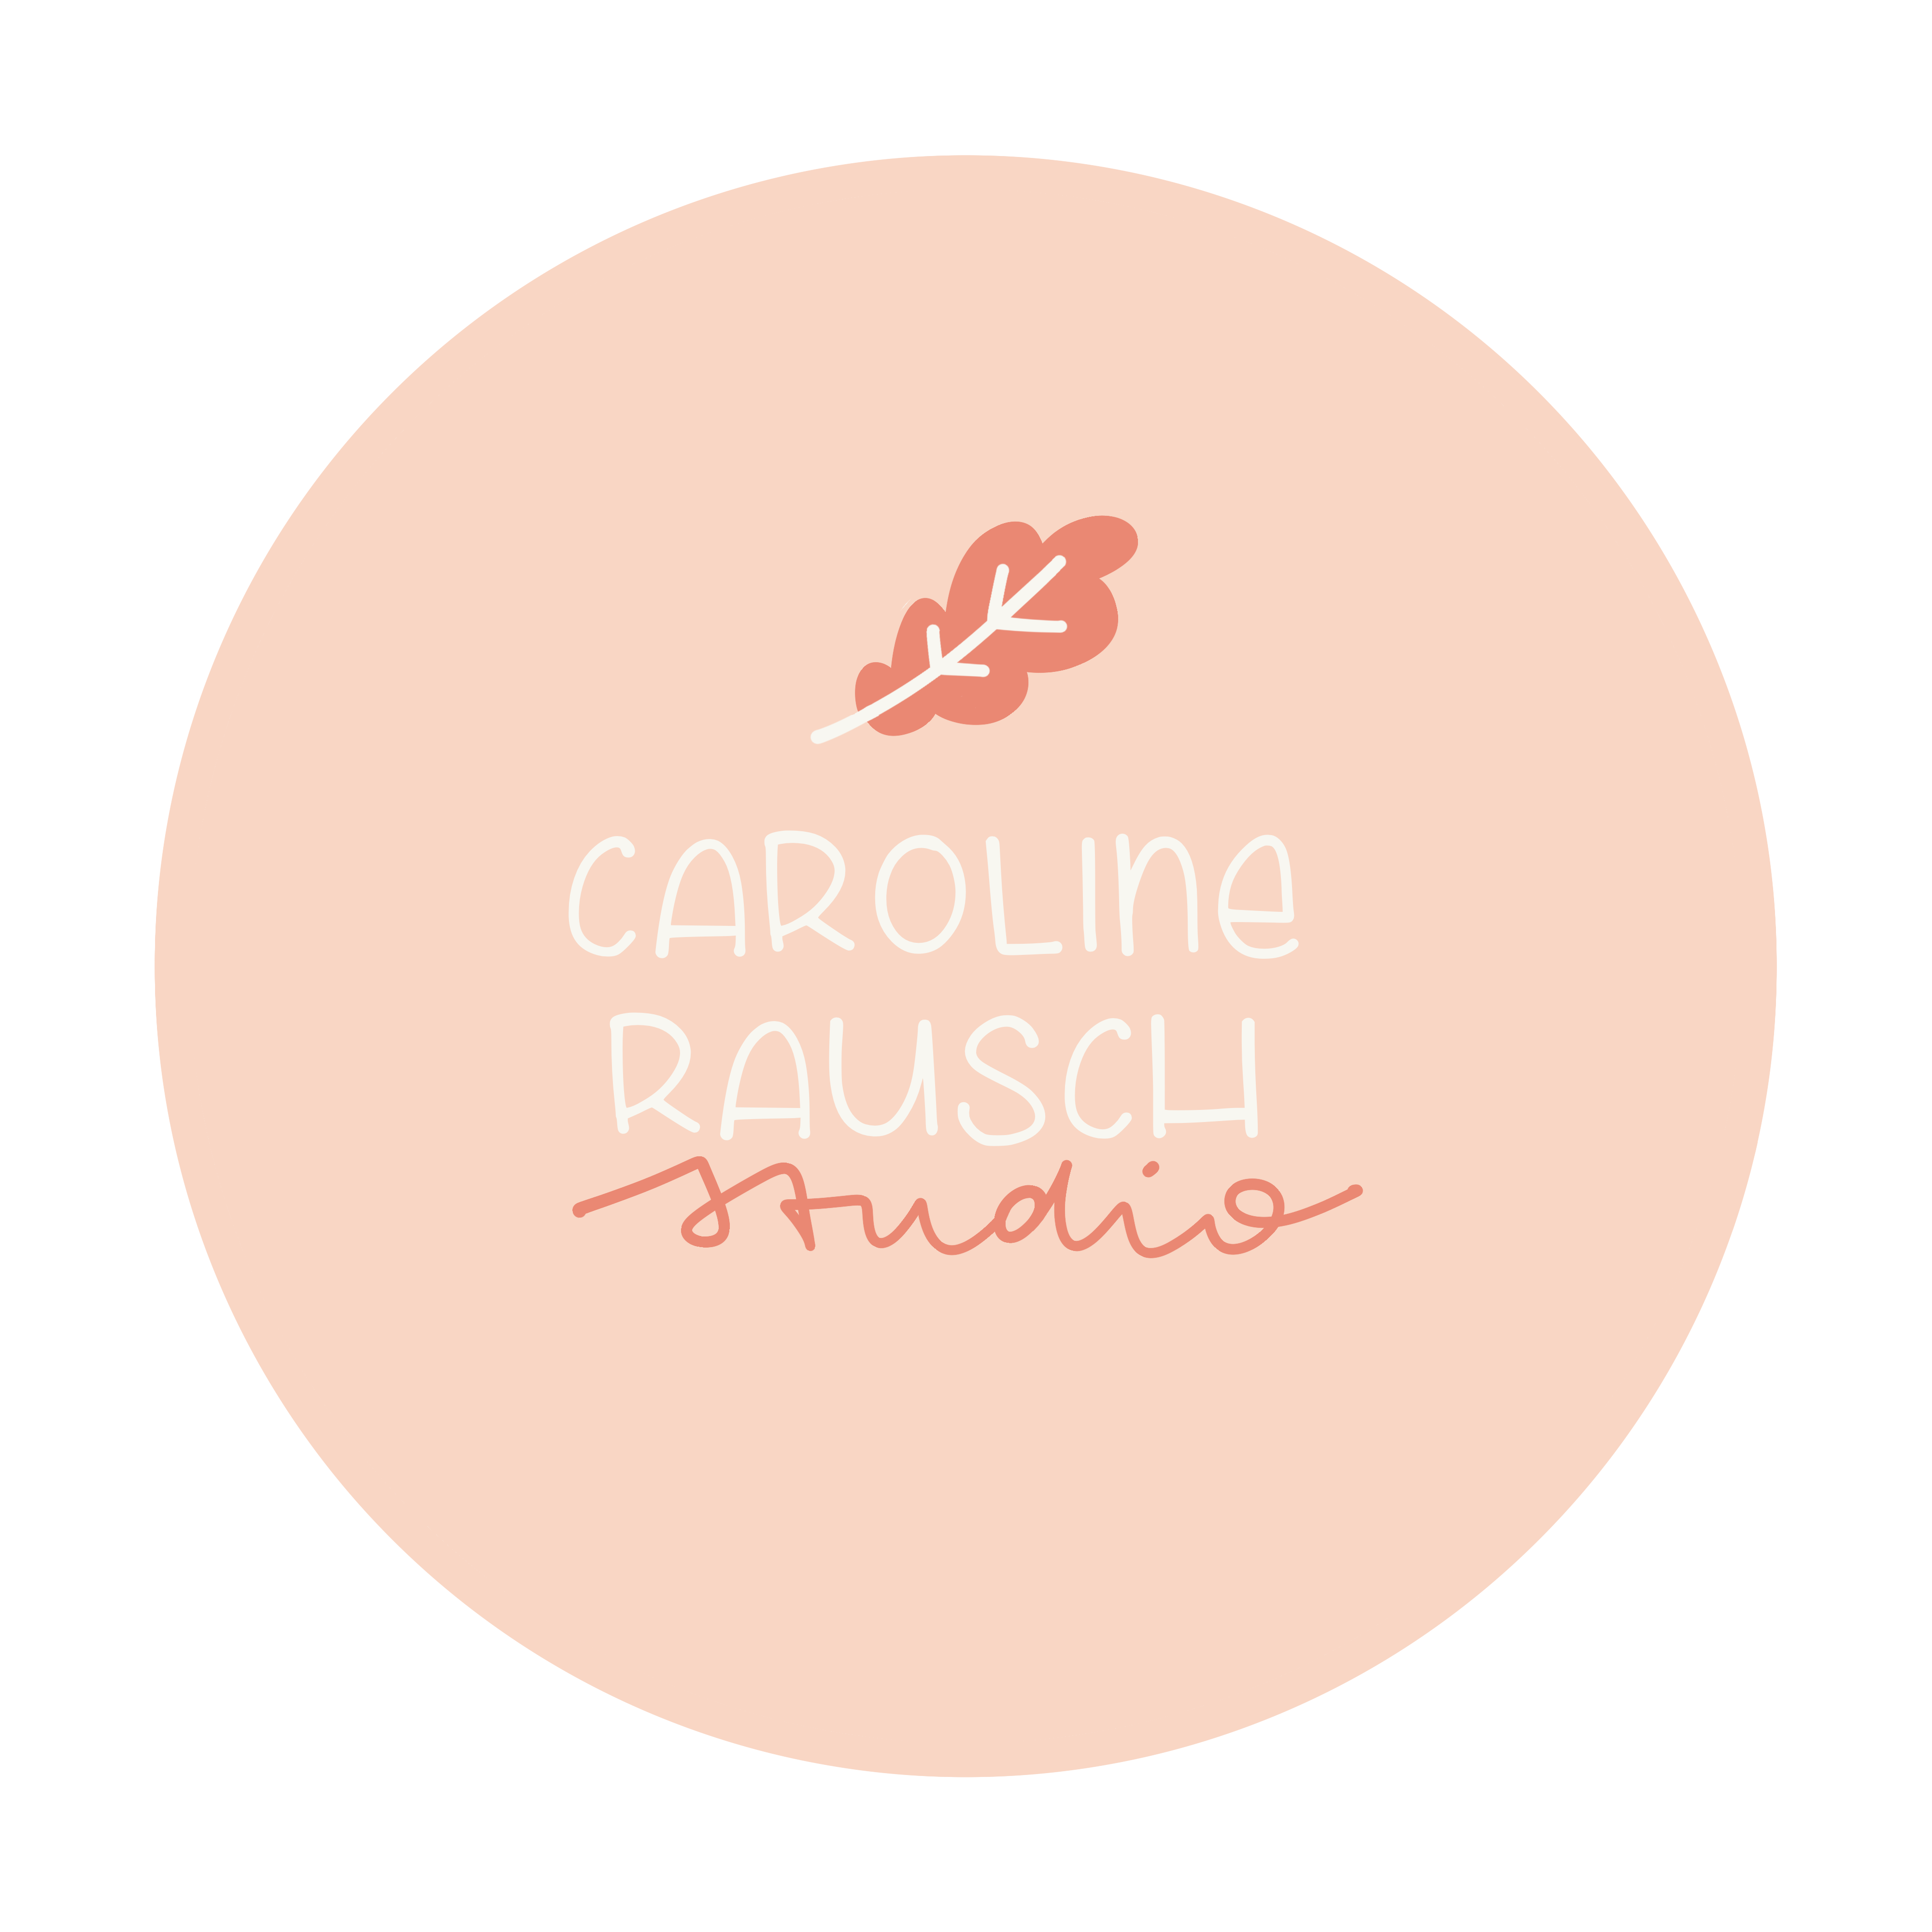 Hi, I'm Caroline.